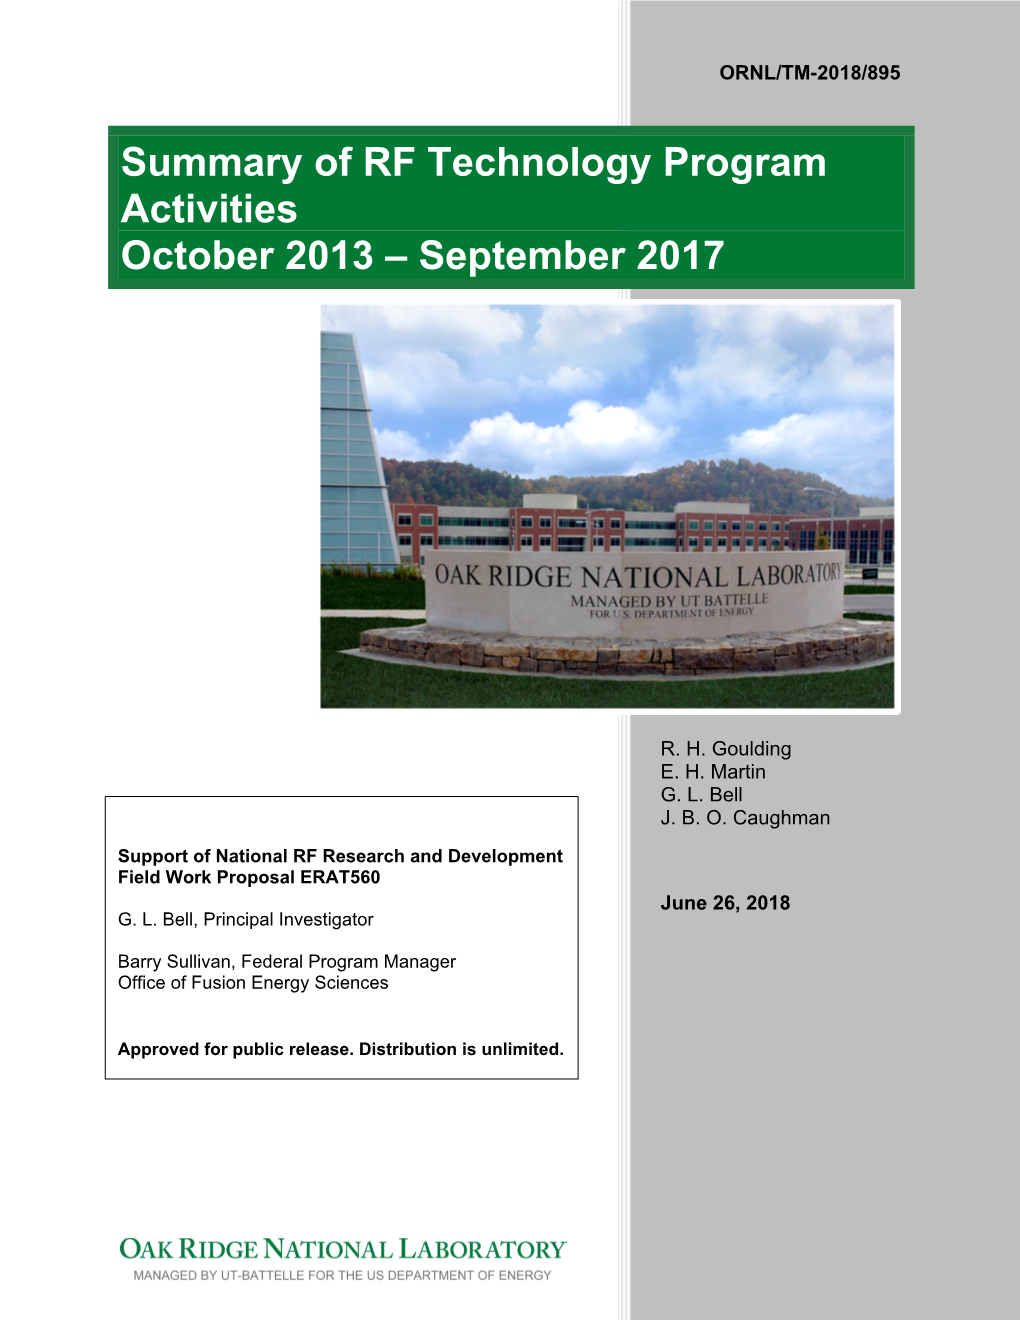 Summary of RF Technology Program Activities October 2013 – September 2017